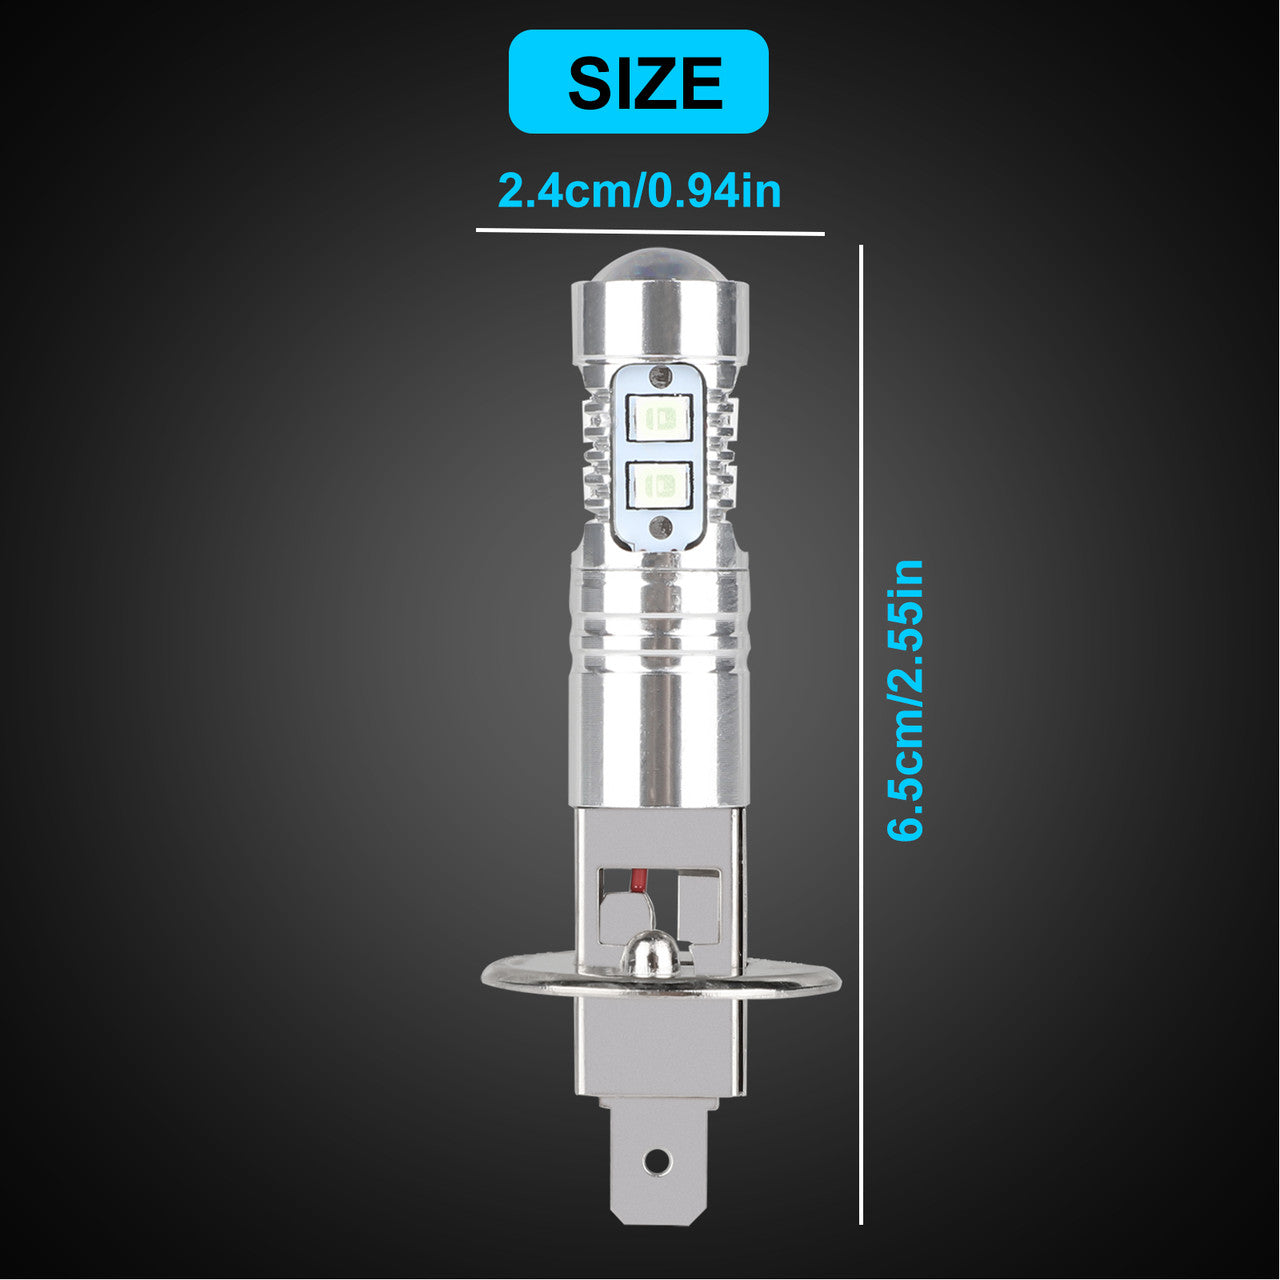 2x H1 Blue LED Headlight Bulb 8000K 1200LM Super Bright H1 Car Light Bulb Replacement for Headlight / Fog Light / Daytime Running Light, Plug & Play